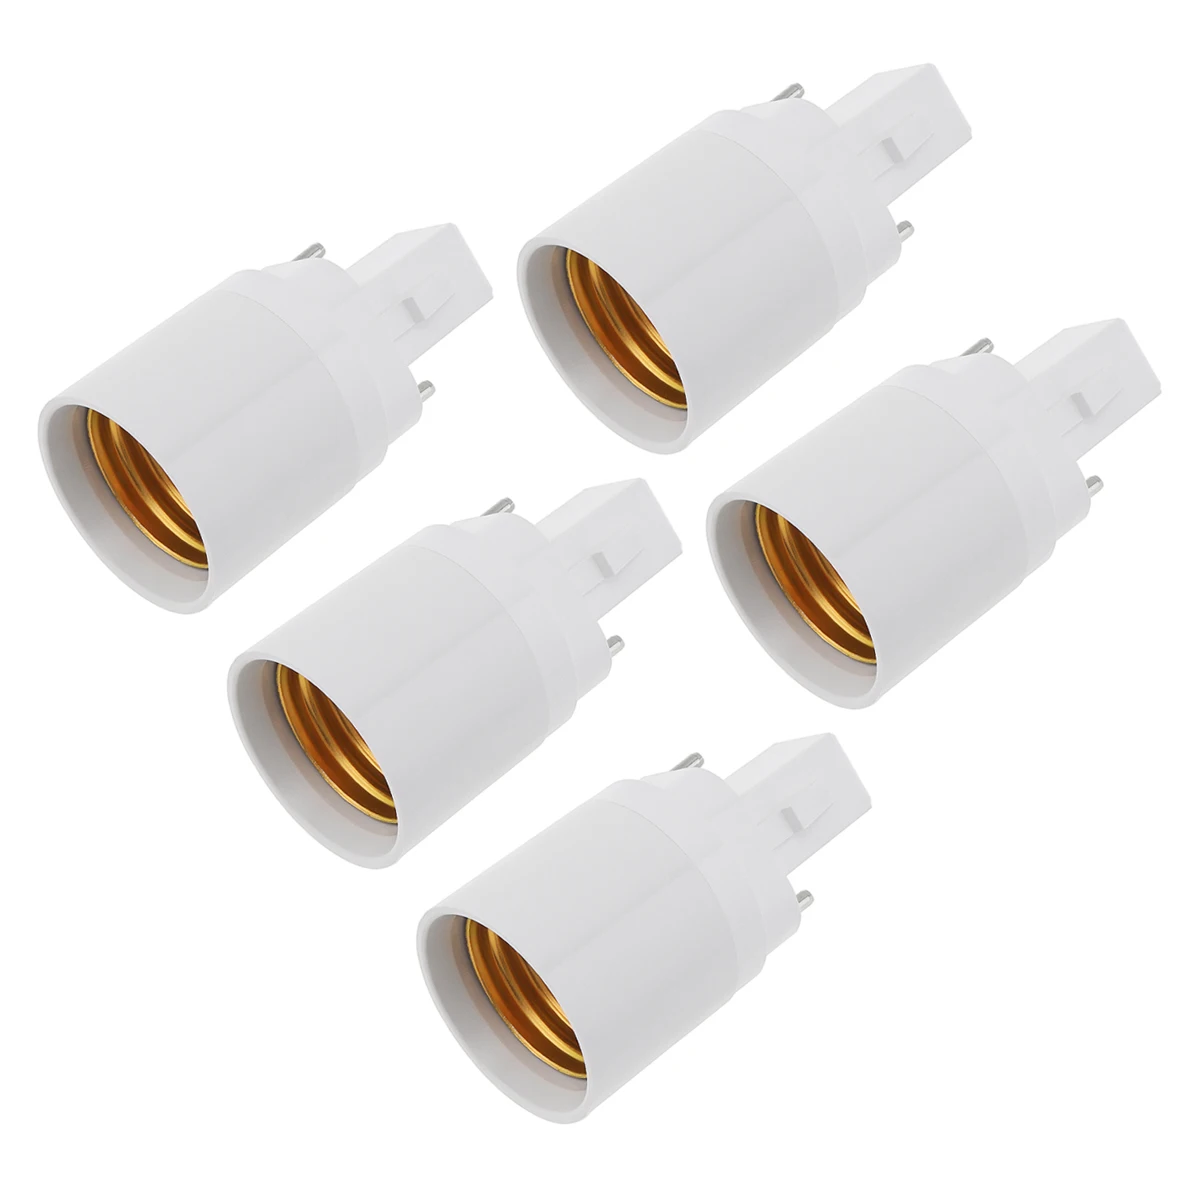 5pcs G24 to E26/E27 Socket Adapter Gx24d 2Pin Conductive Lamp Base Adapters G24d to Medium Edison Light Socket Converter